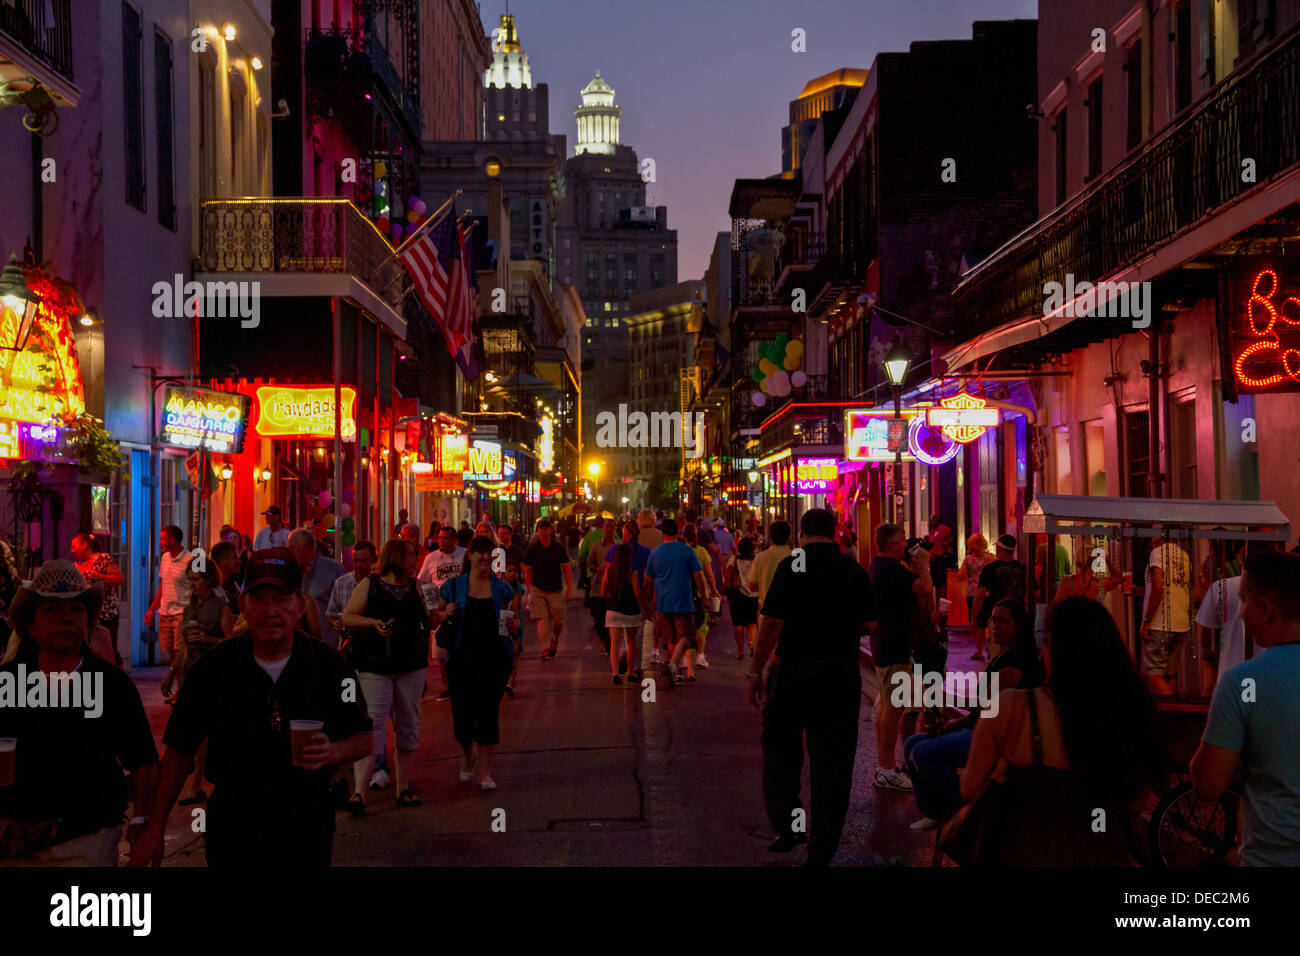 New Orleans night life – Bourbon street. Stock Photo